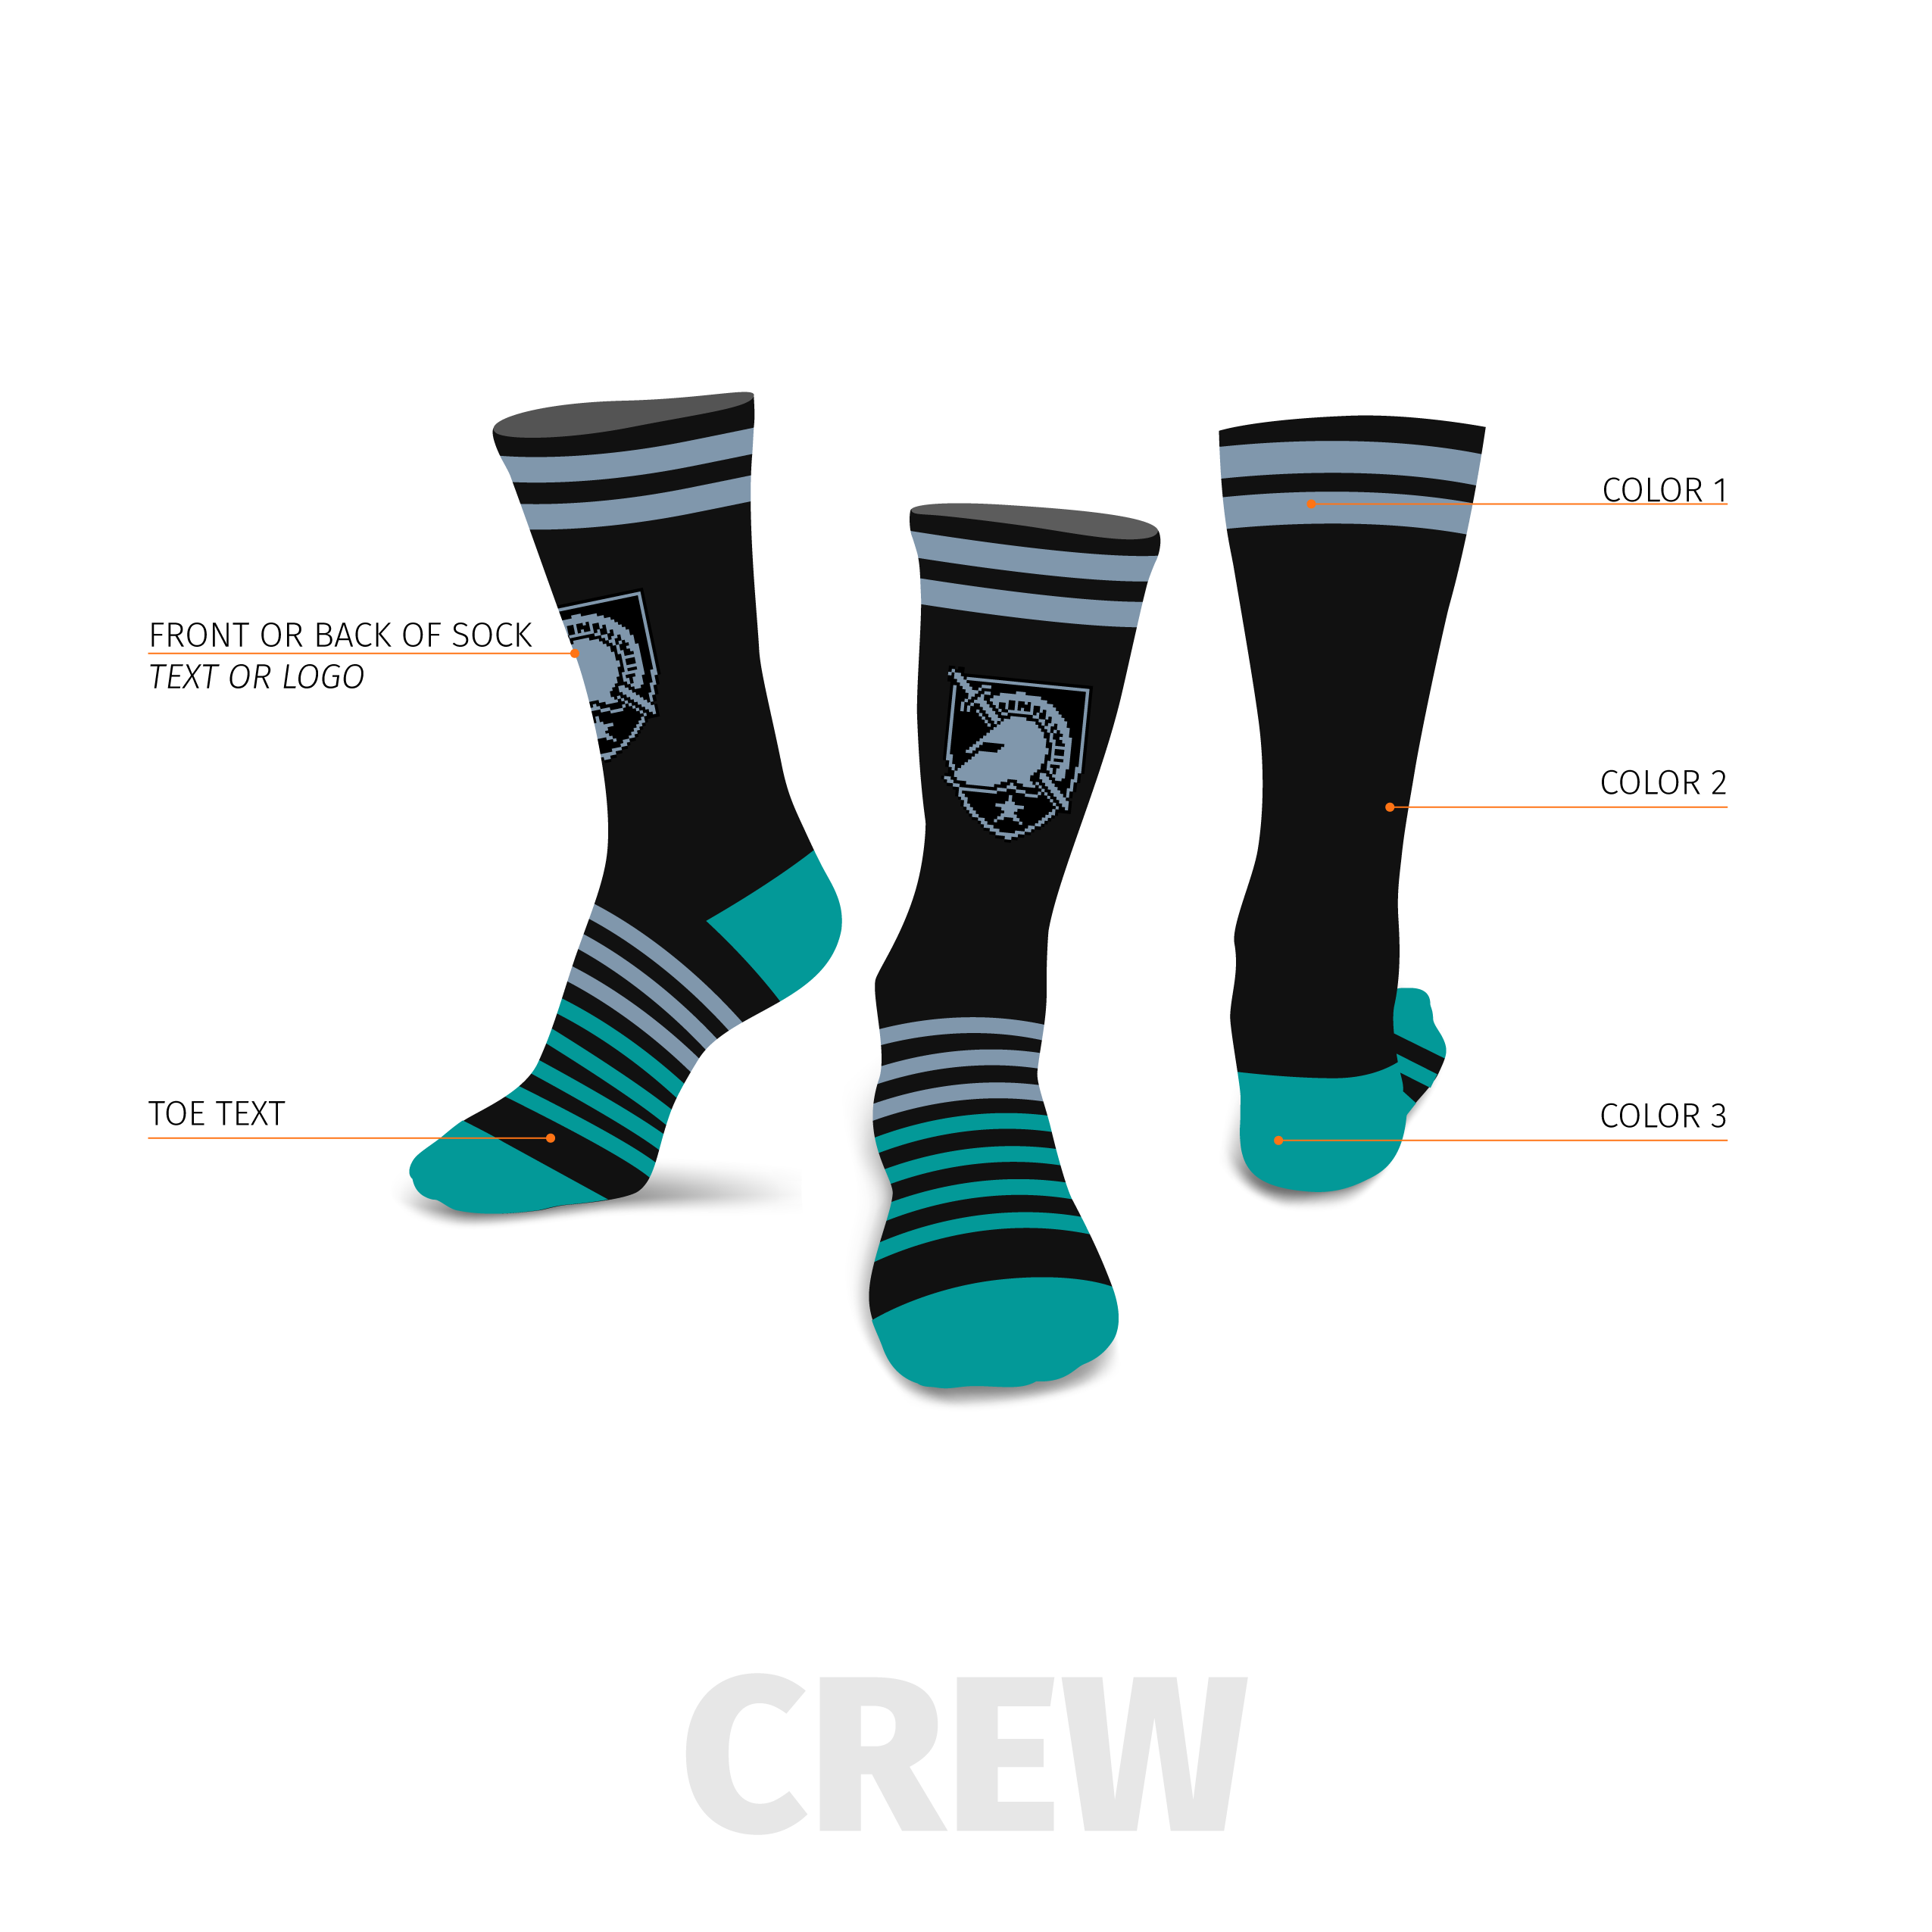 High Quality Custom Socks Made In USA - Personalized Socks | SocksRock ...